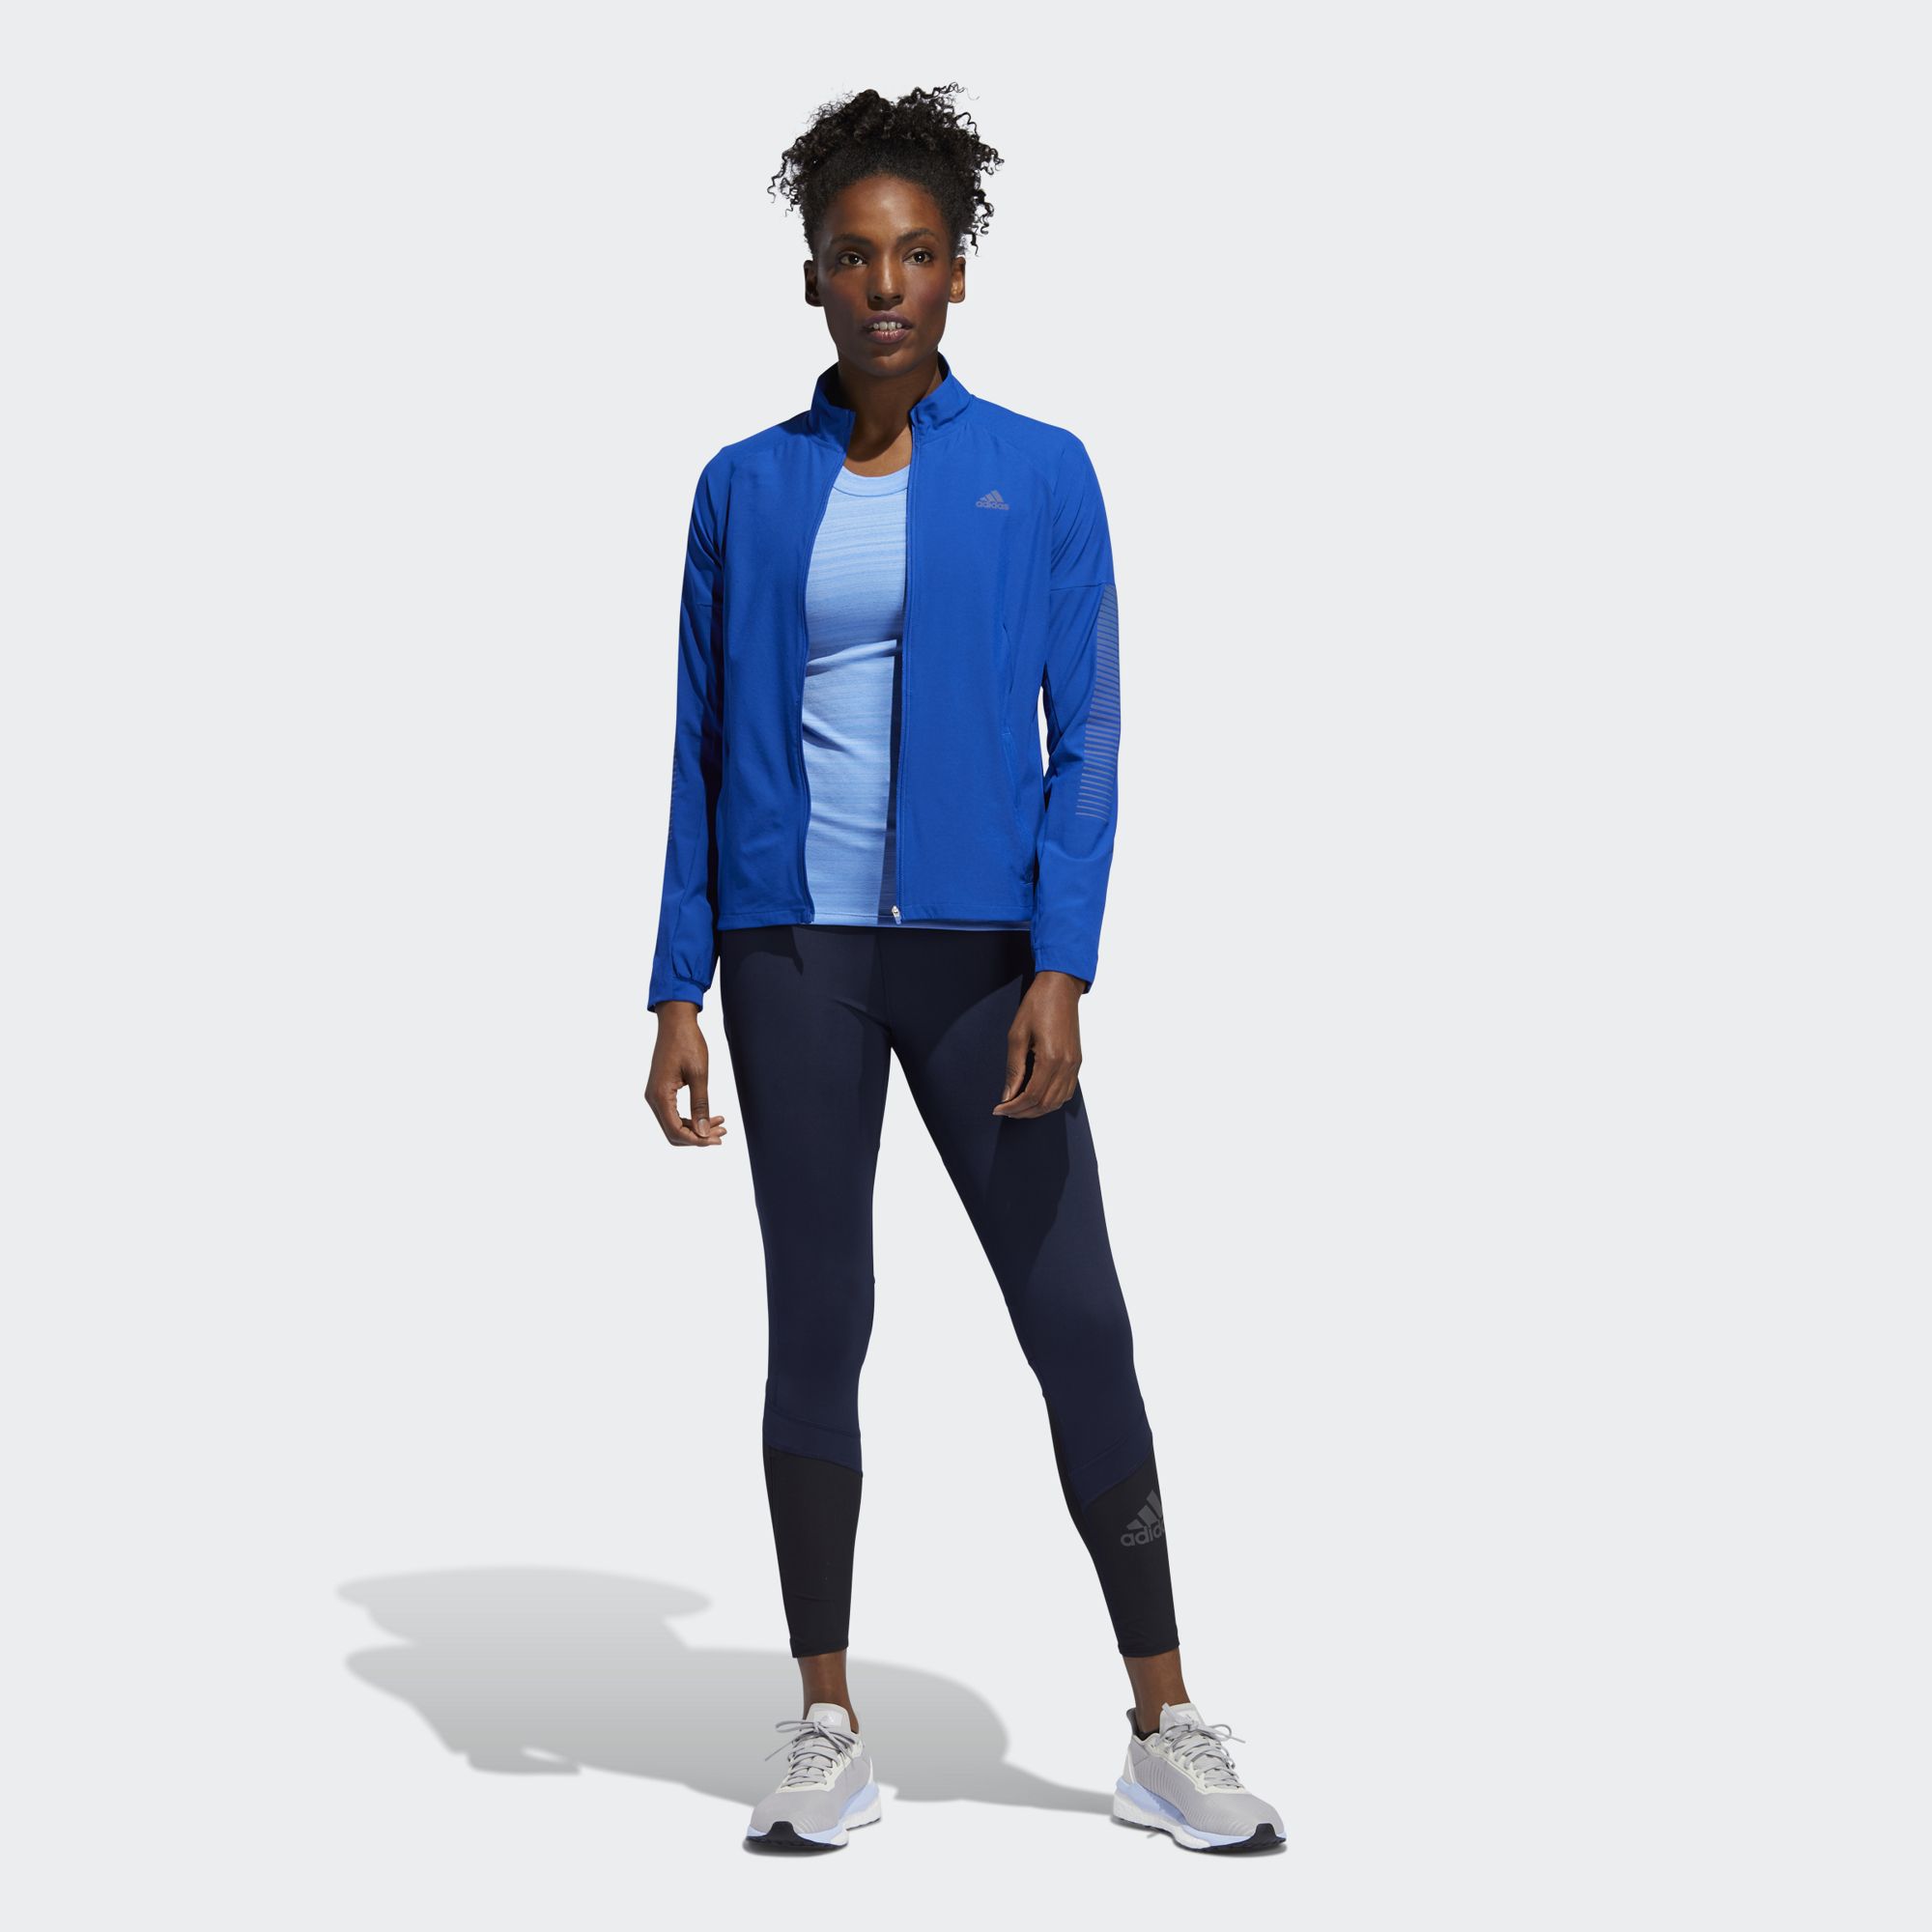 adidas women's jackets online